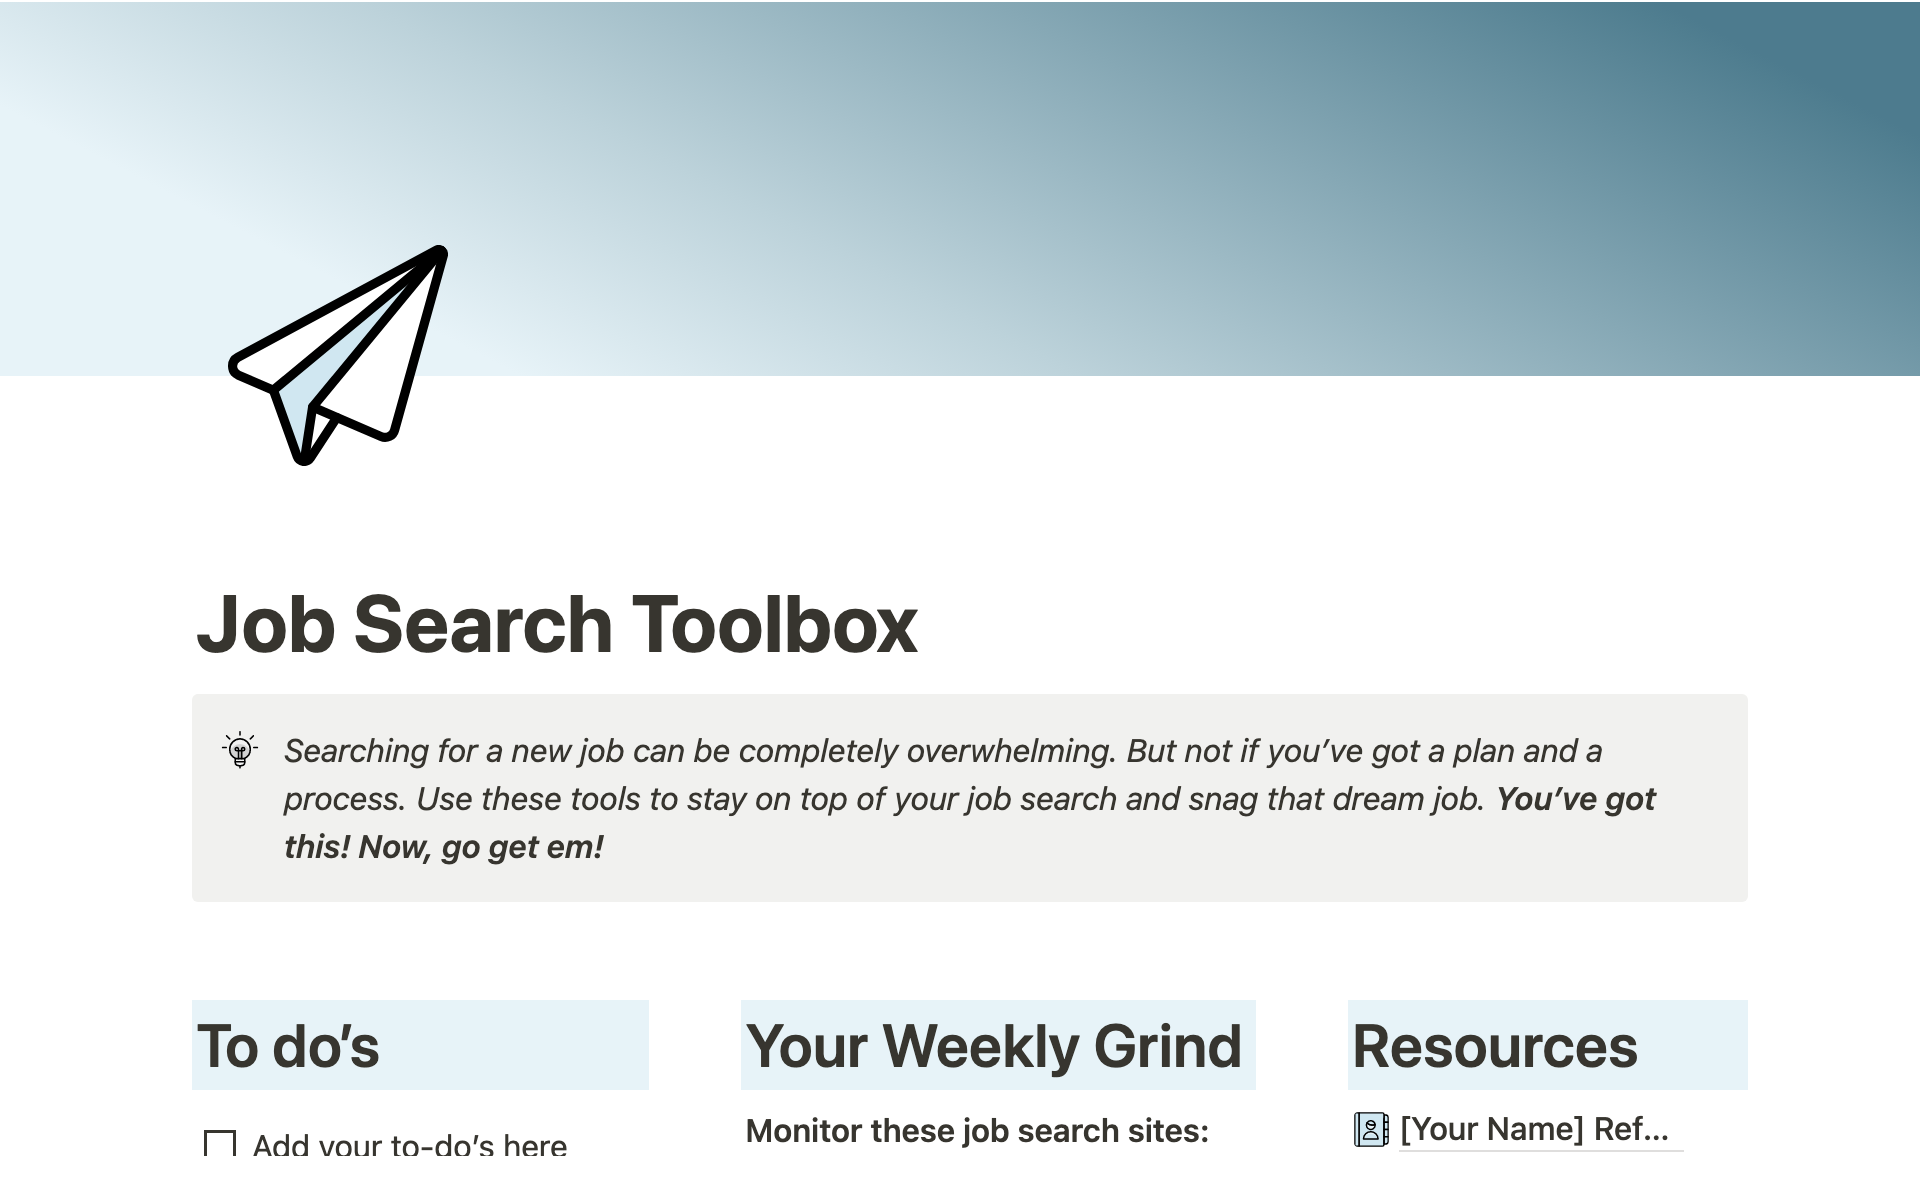 Aperçu du modèle de Job Search Toolbox